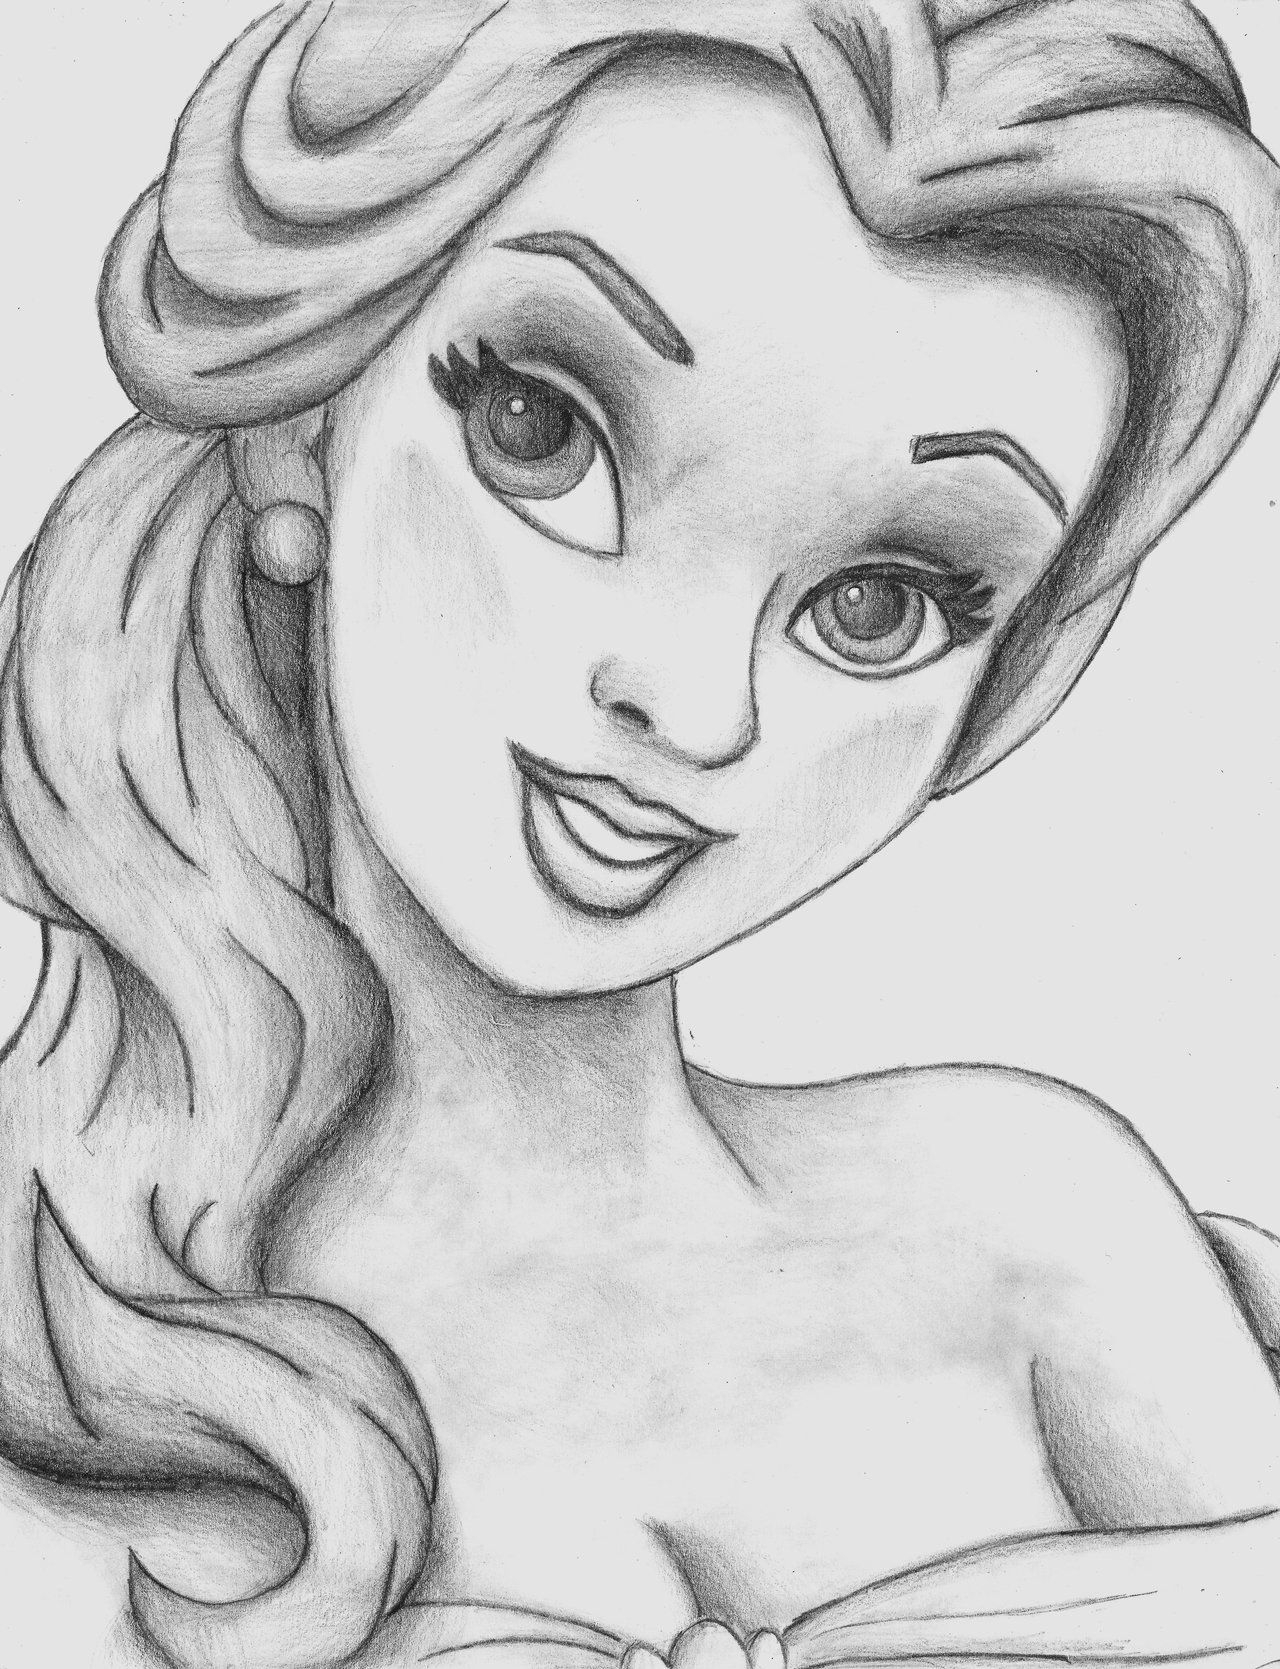  Disney  Princess Pencil  Drawing  at PaintingValley com 